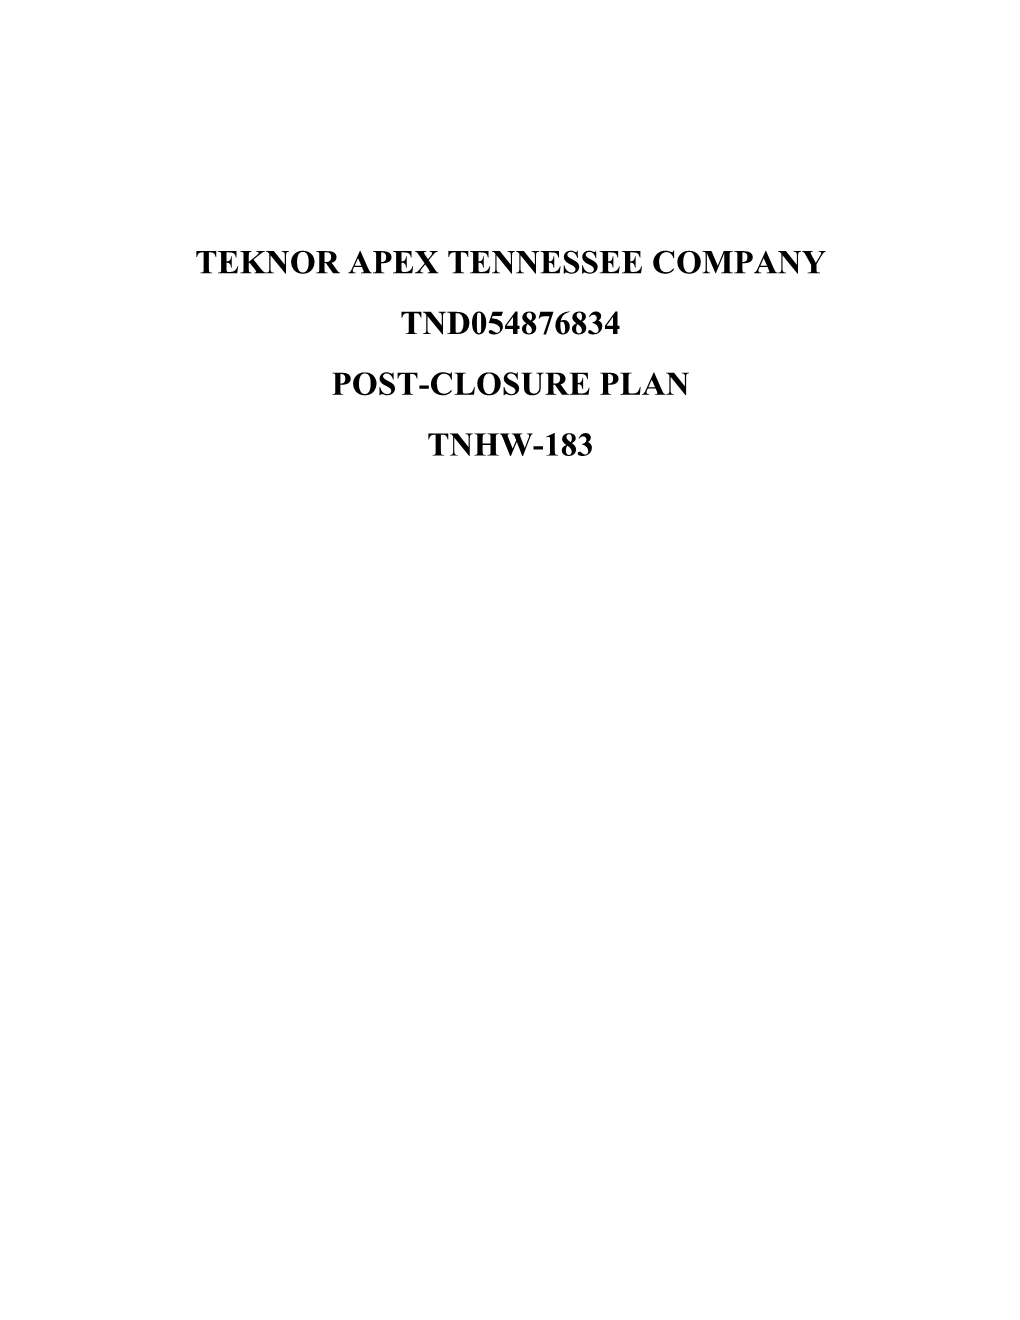 Teknor Apex Tennessee Company Tnd054876834 Post-Closure Plan Tnhw-183